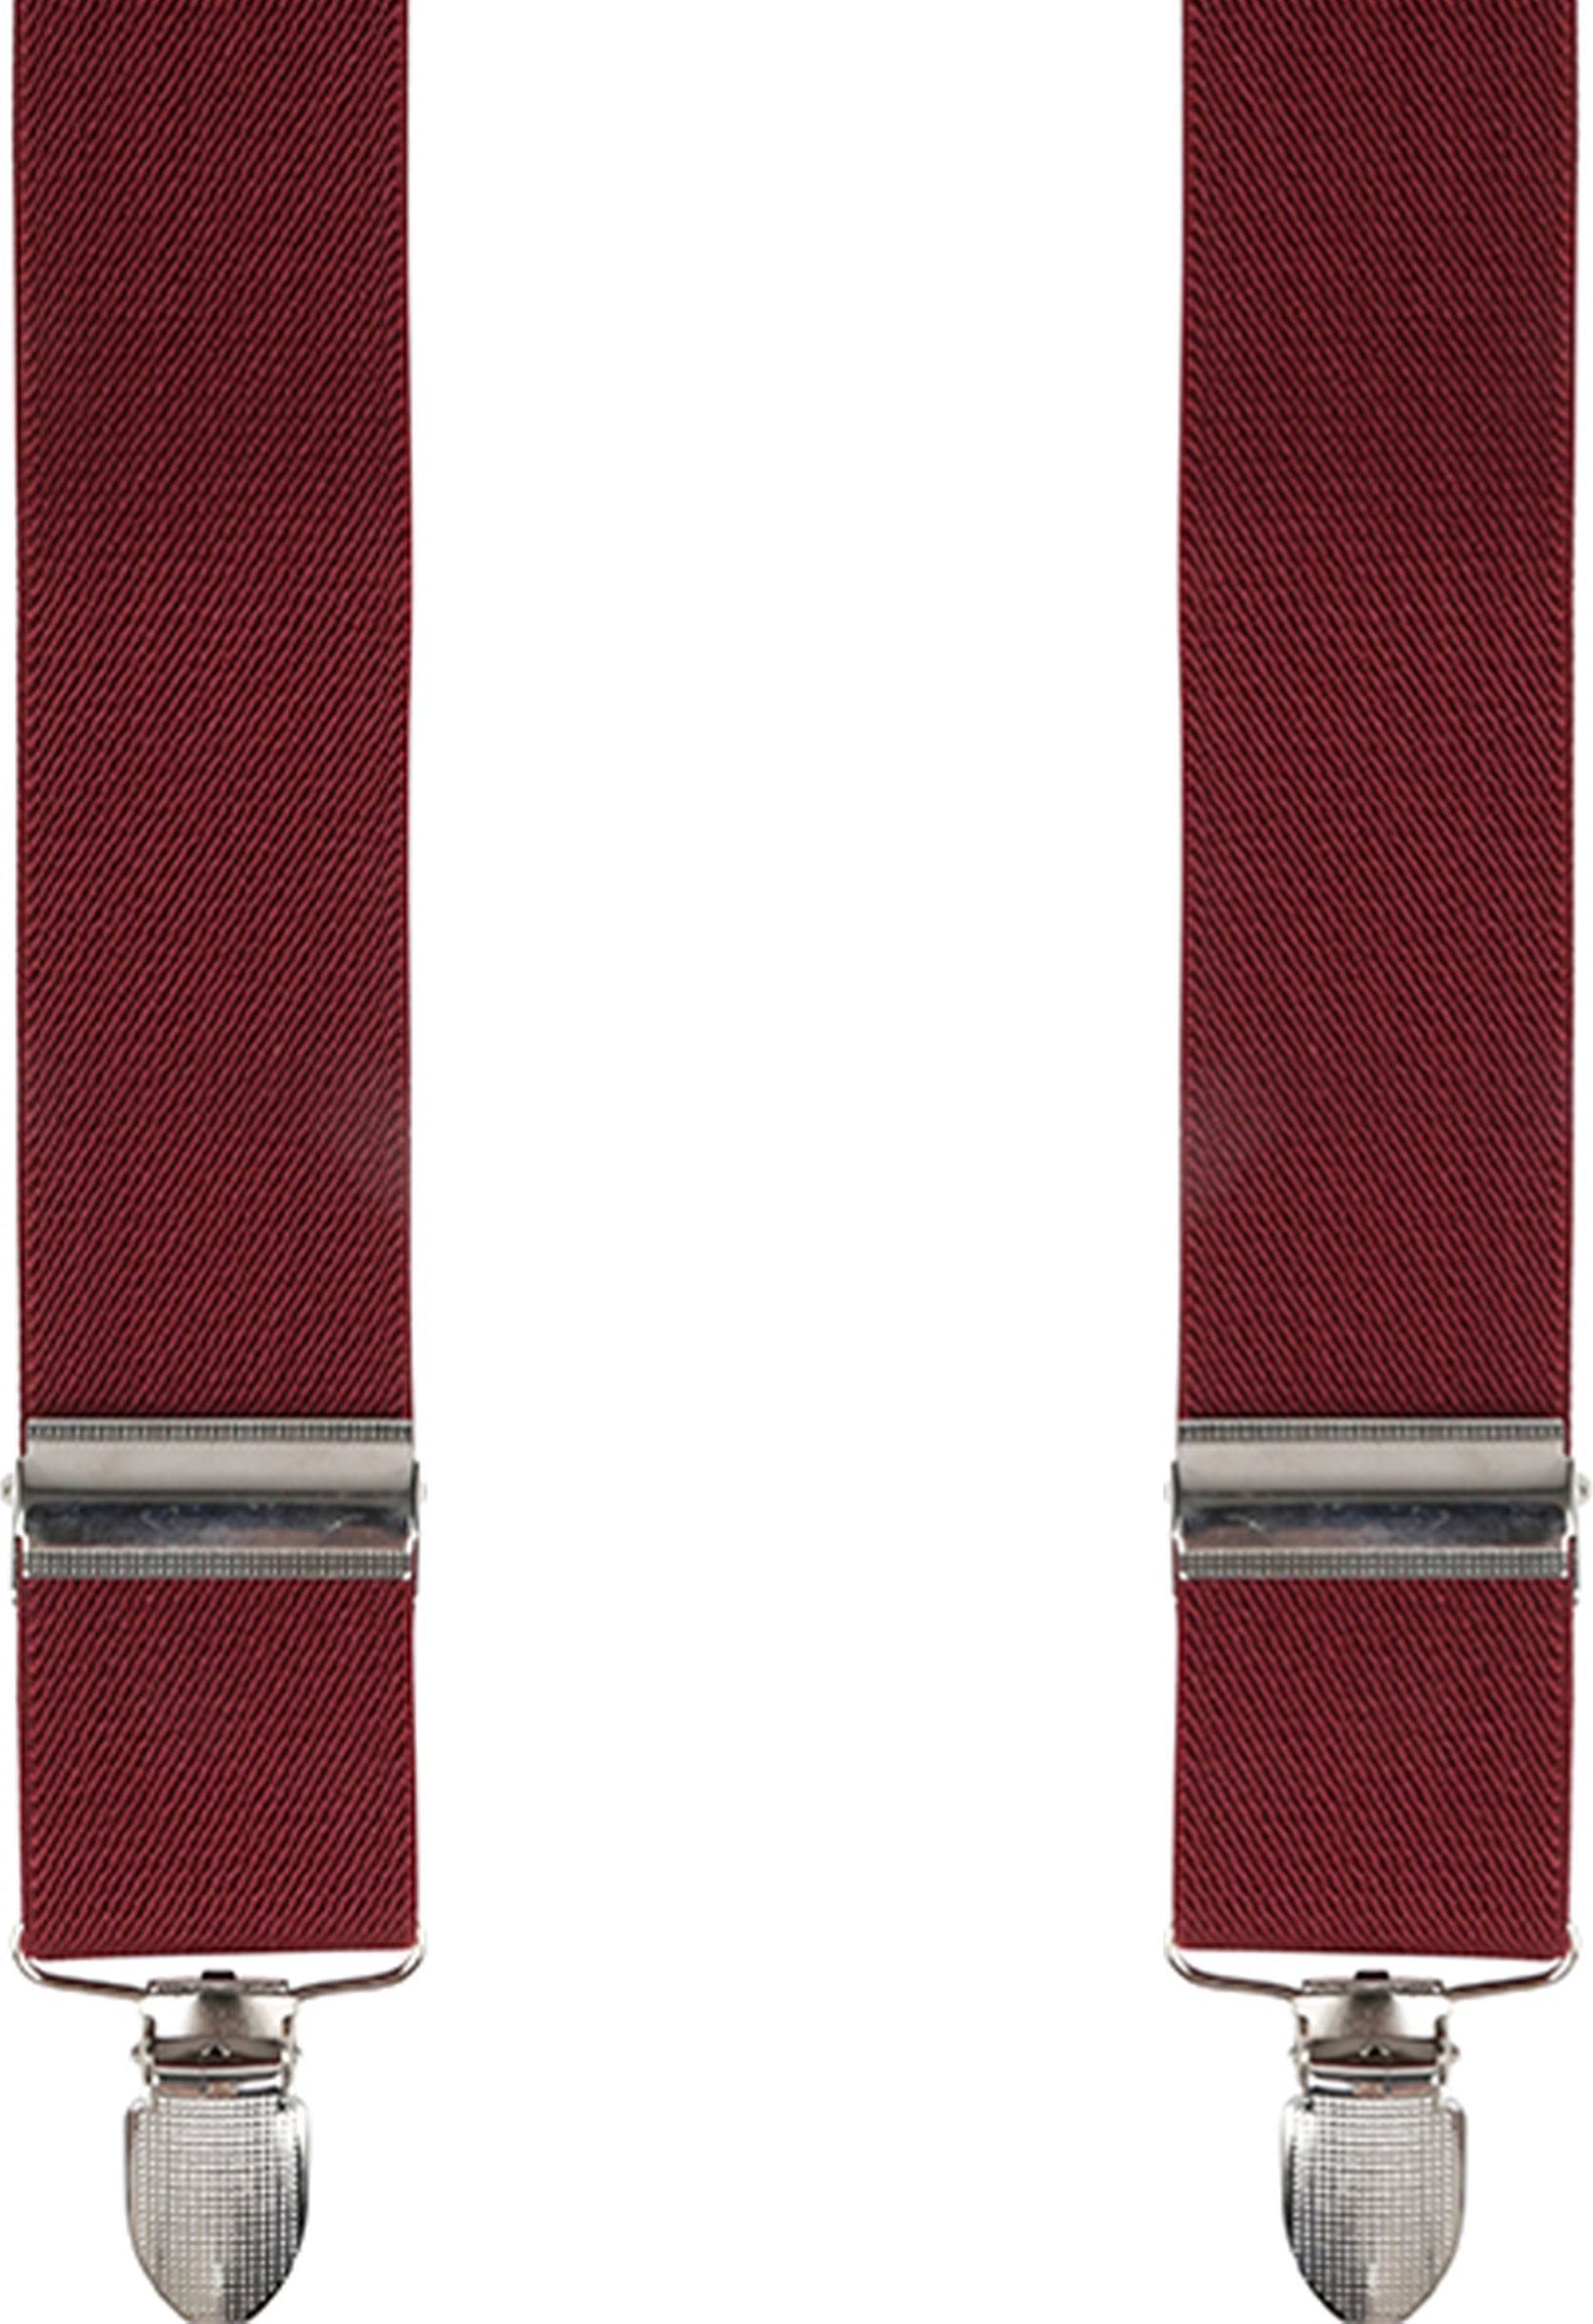 Suitable Suspenders Bordeaux Burgundy Red